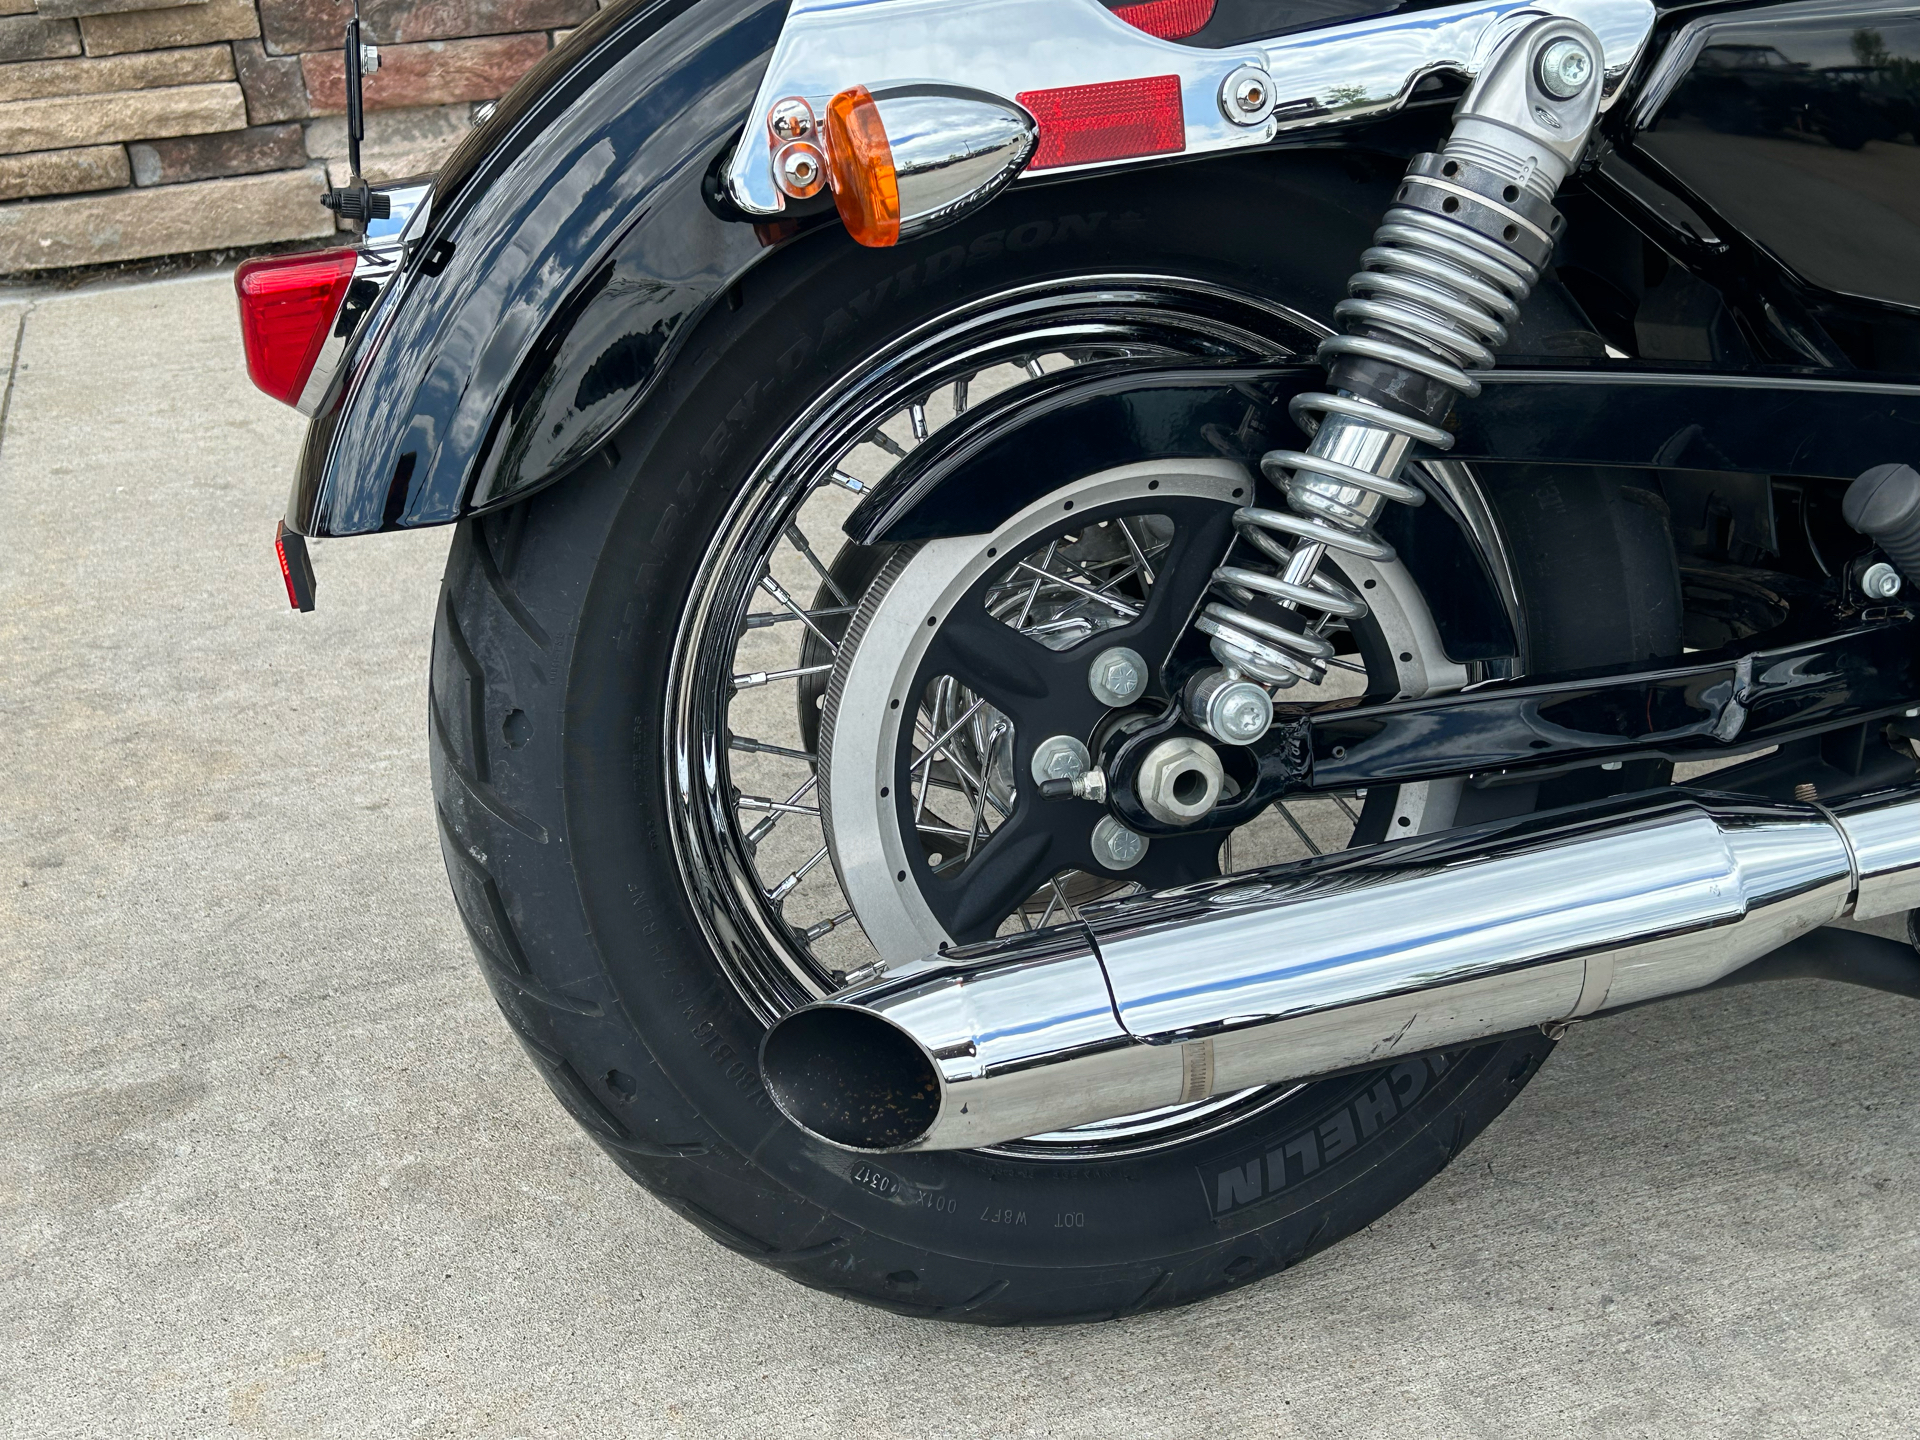 2017 Harley-Davidson 1200 Custom in Columbia, Missouri - Photo 5